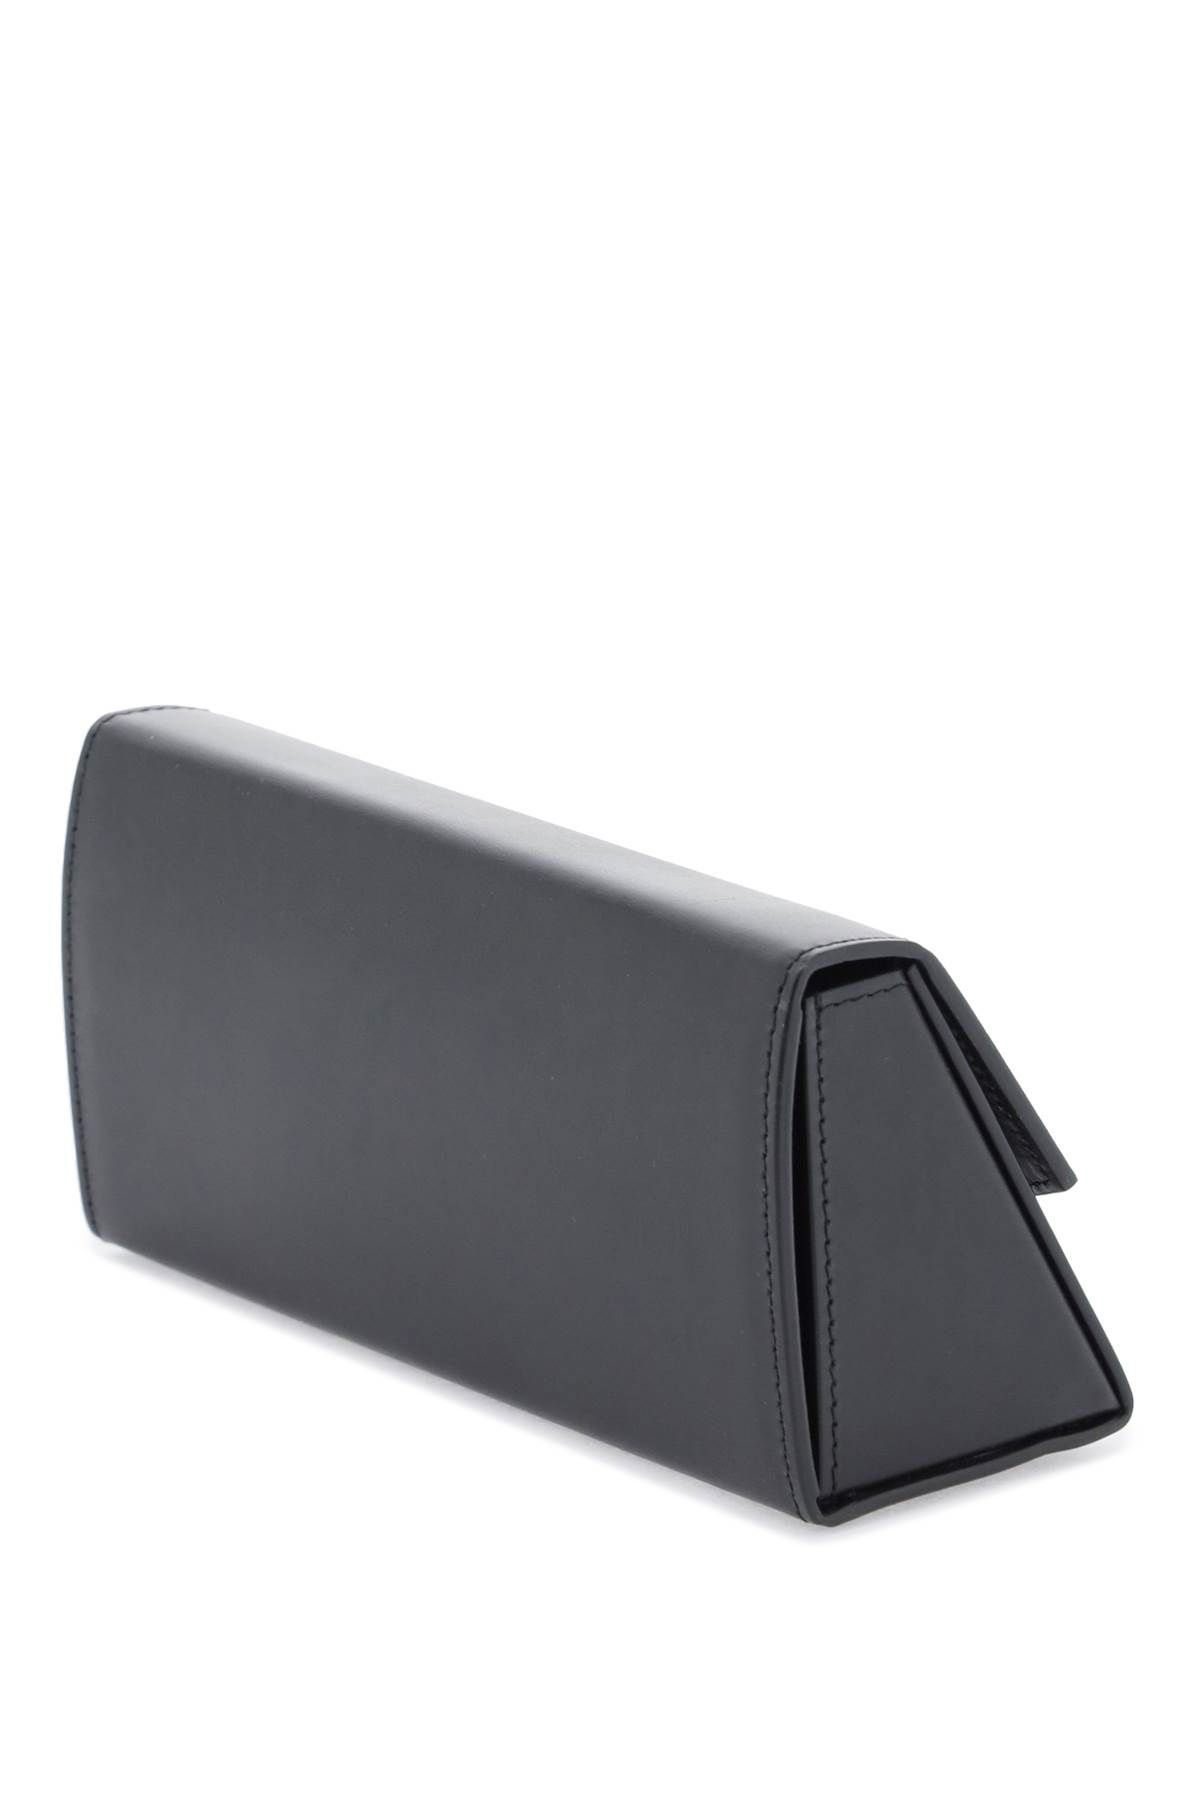 Shop Ferragamo Compact Crossbody Bag In Black